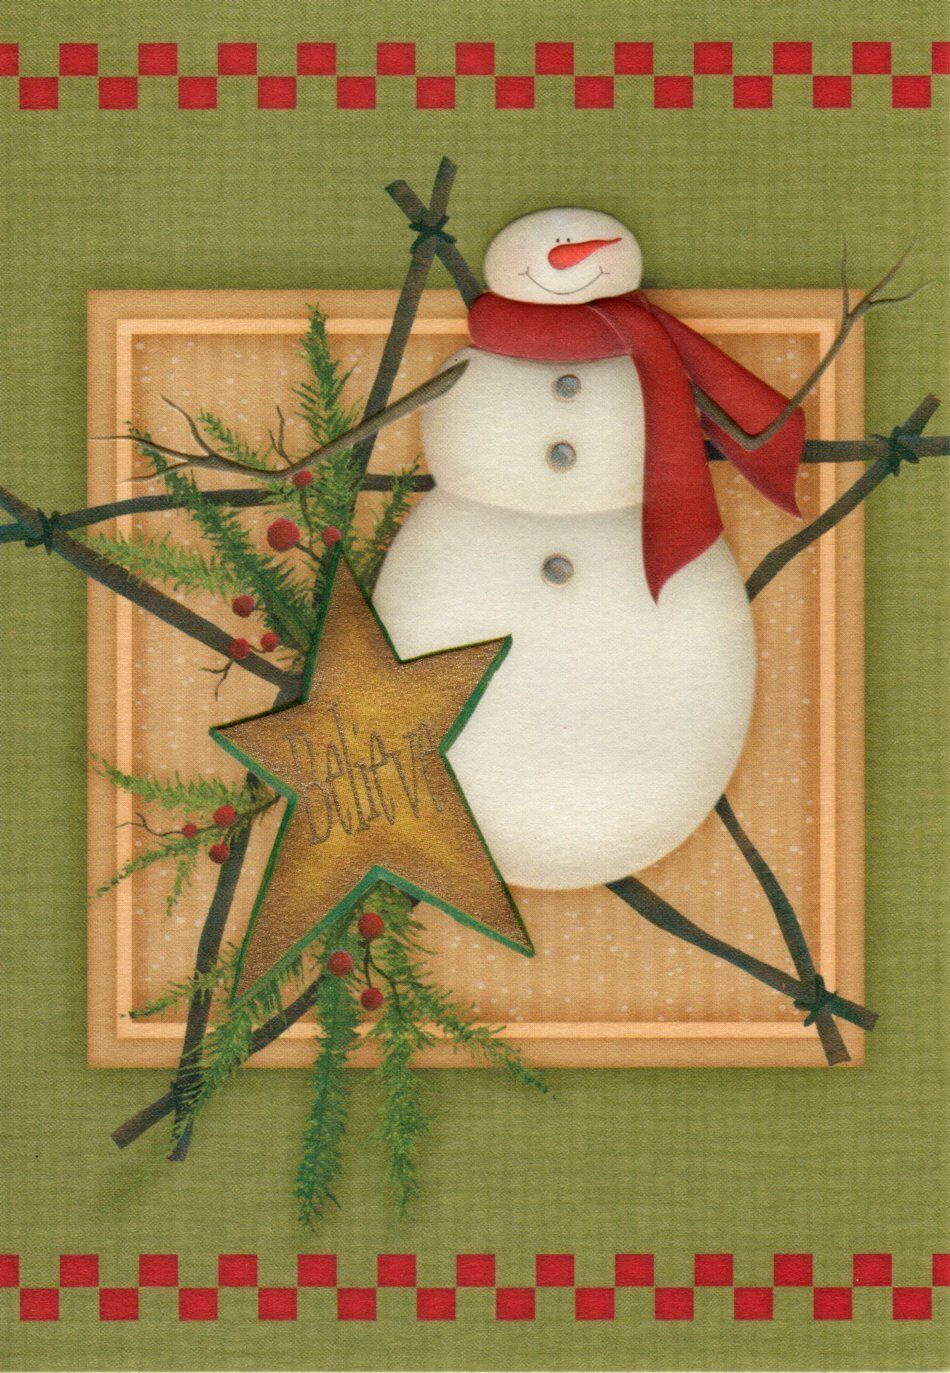 Snowman Believe Gold Star Merry Christmas Hallmark Cards - Set of 29